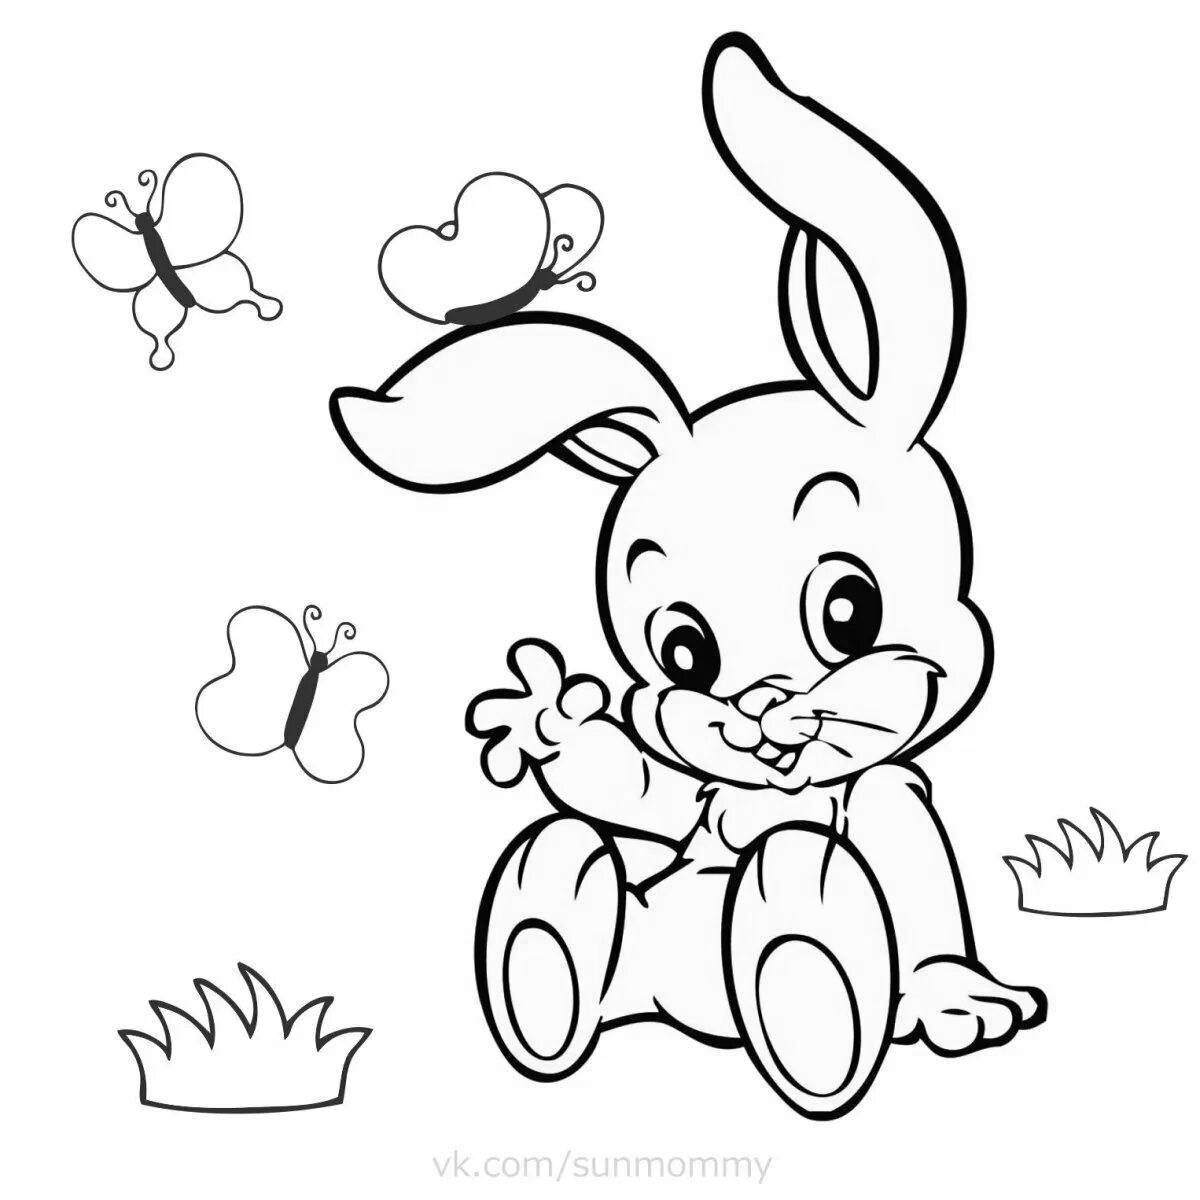 Naughty rabbit with balloons